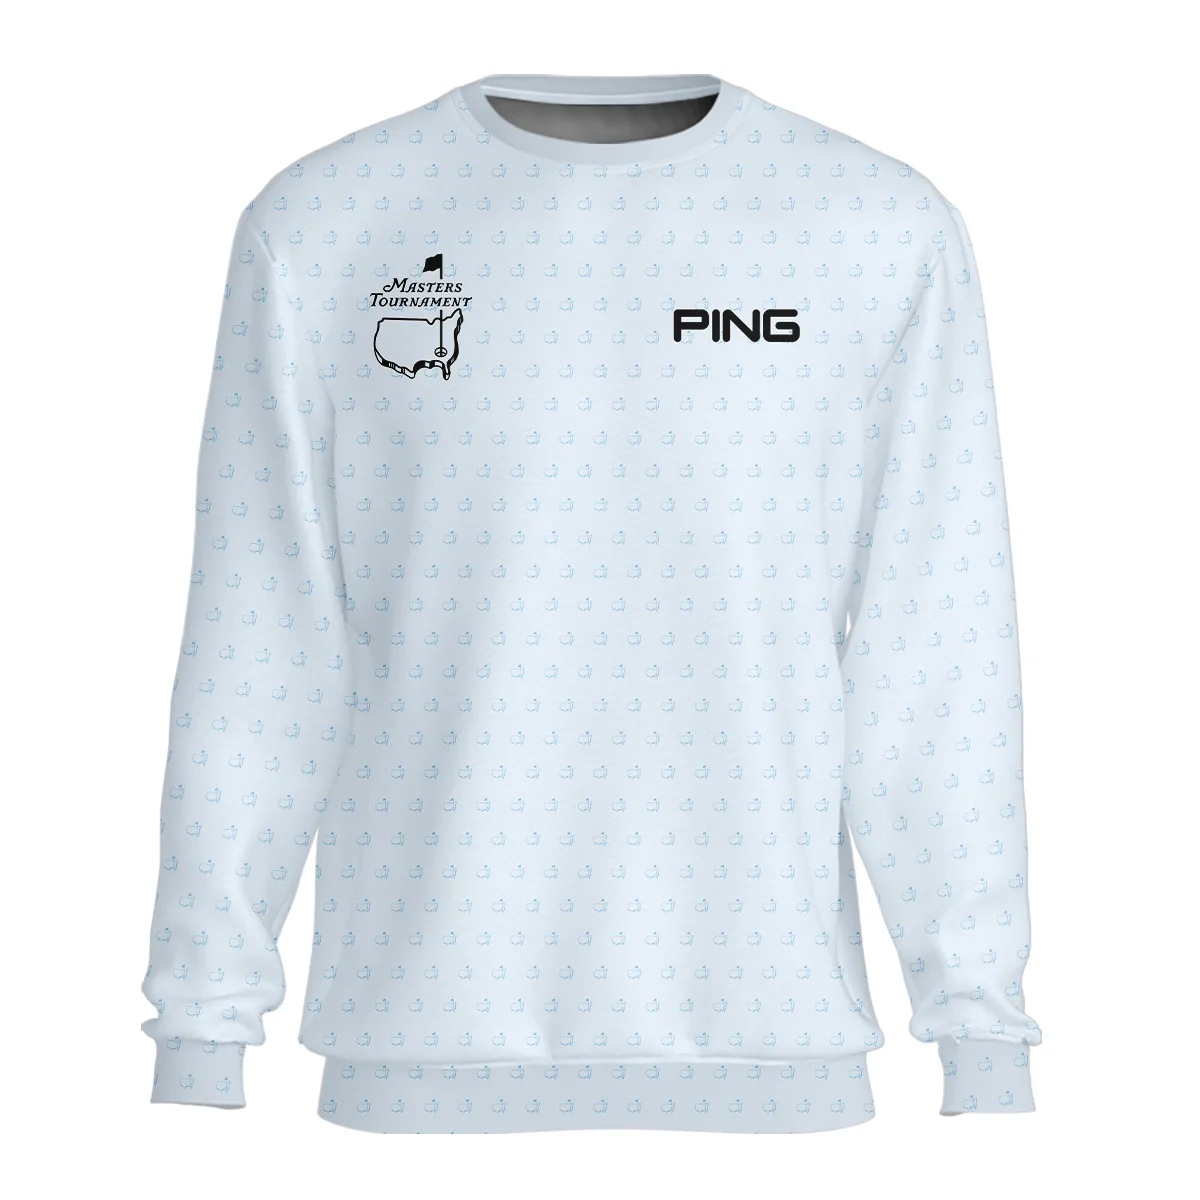 Pattern Masters Tournament Ping Unisex Sweatshirt White Light Blue Color Pattern Logo  Sweatshirt